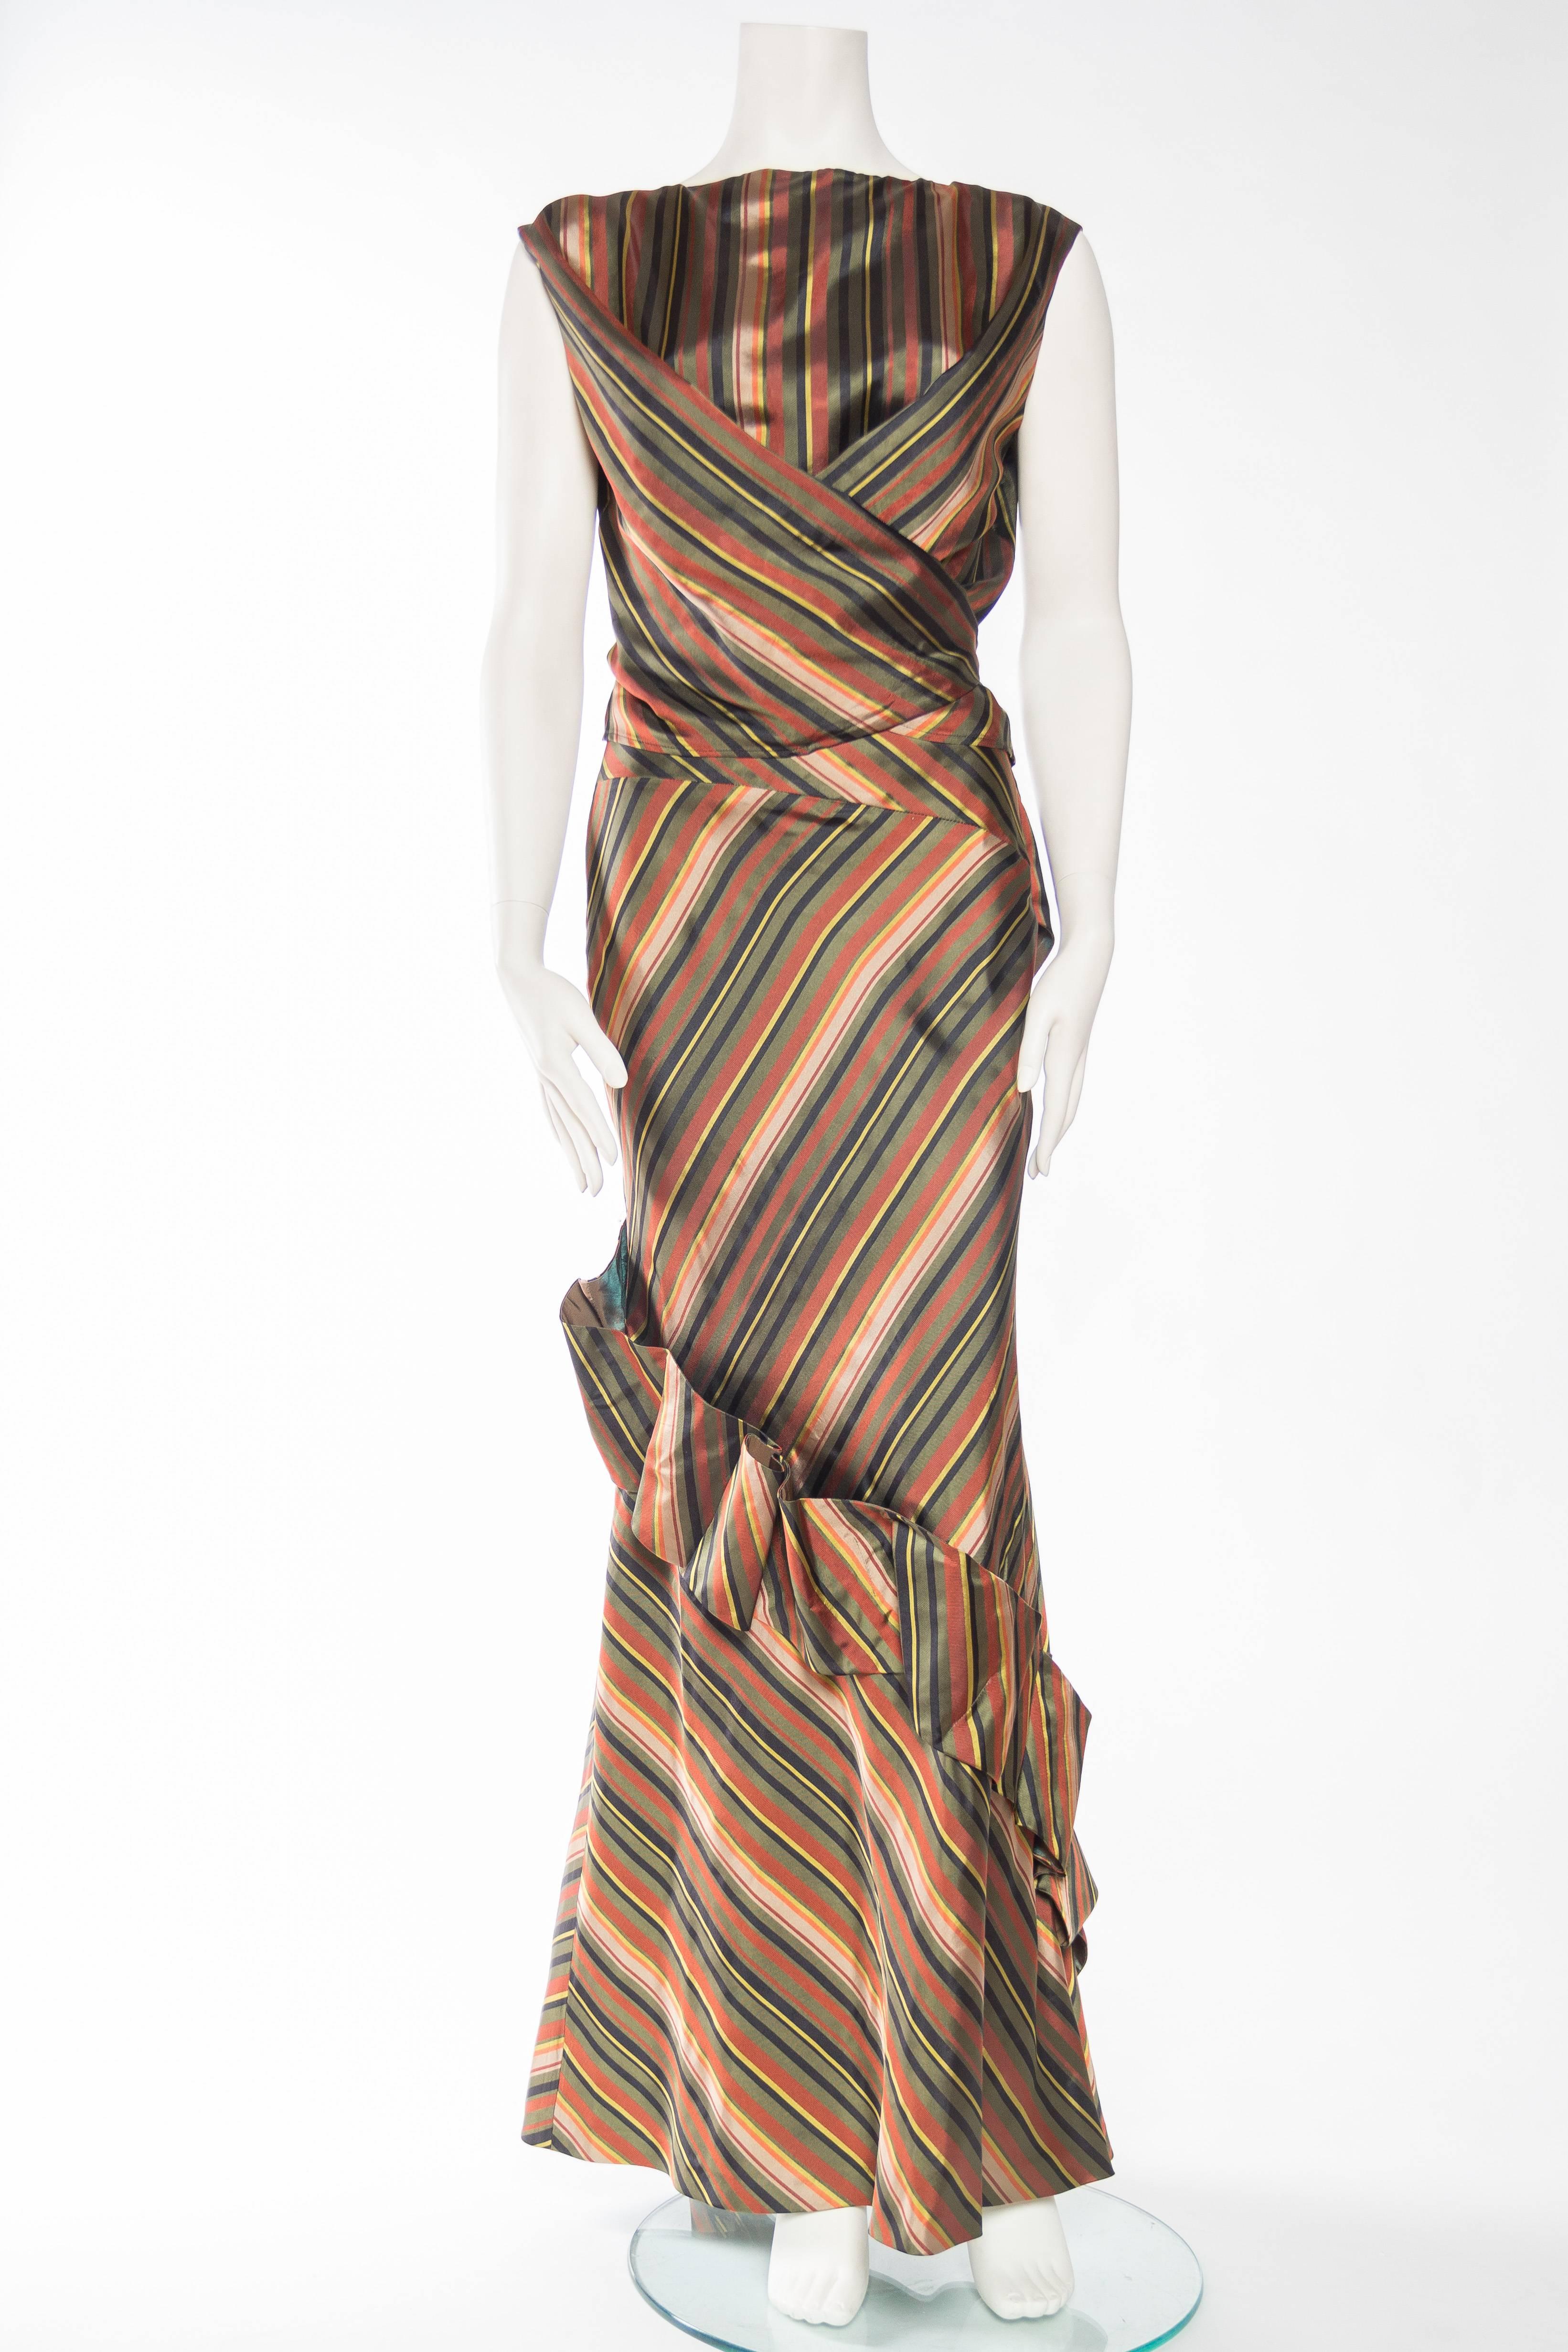 Tagged a European size 40 1990S KENZO Dark Green & Copper Striped Silk Blend Skirt Top Bias Cut 2 Piece Gown 